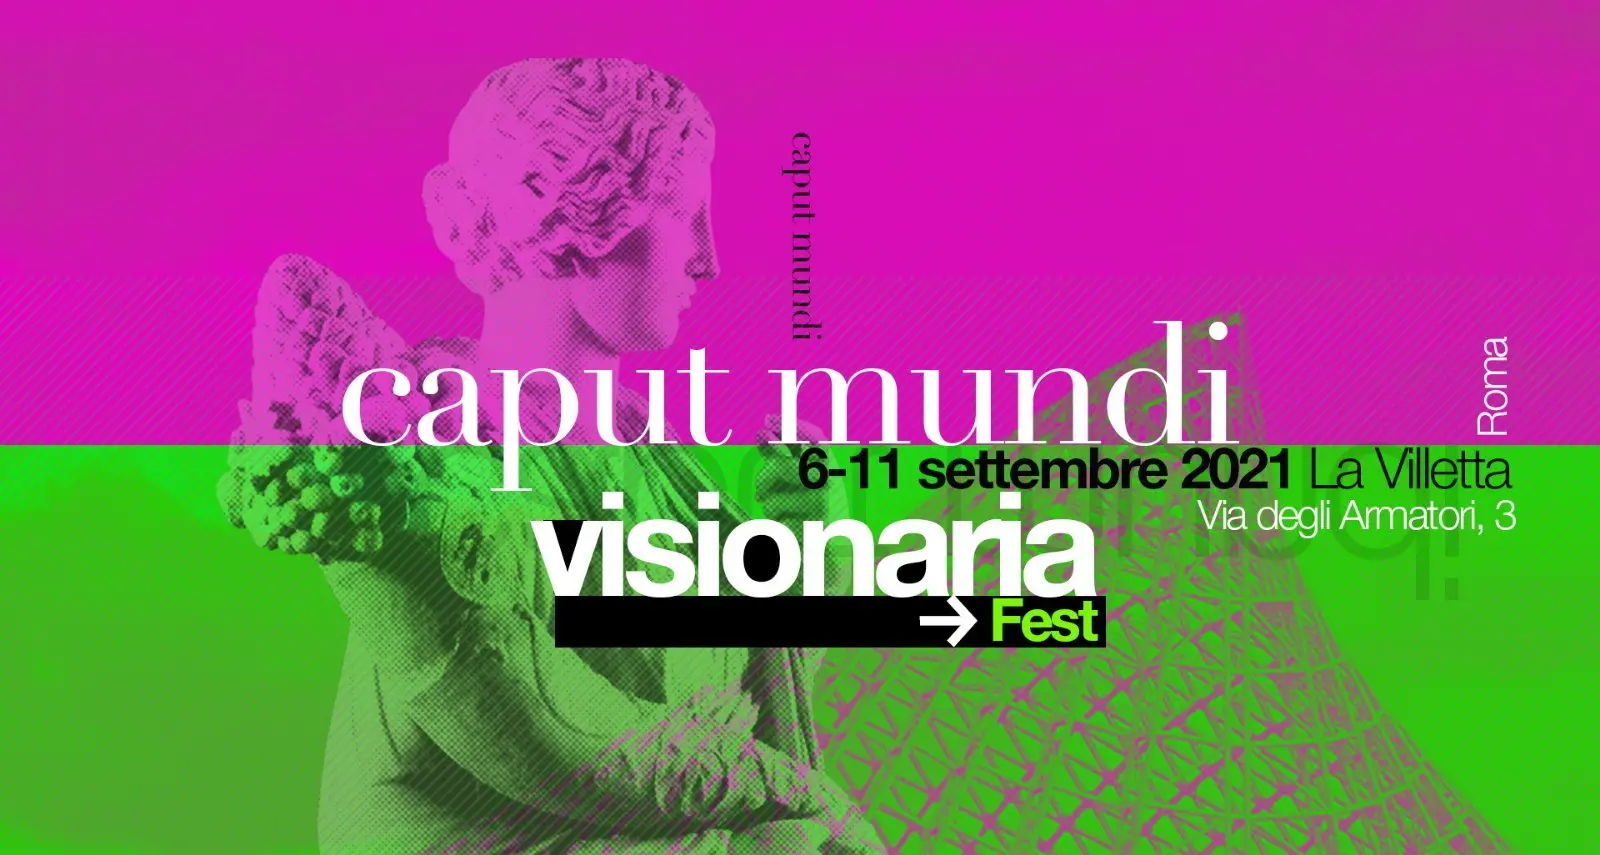 Visionaria Fest, lo sguardo su Roma